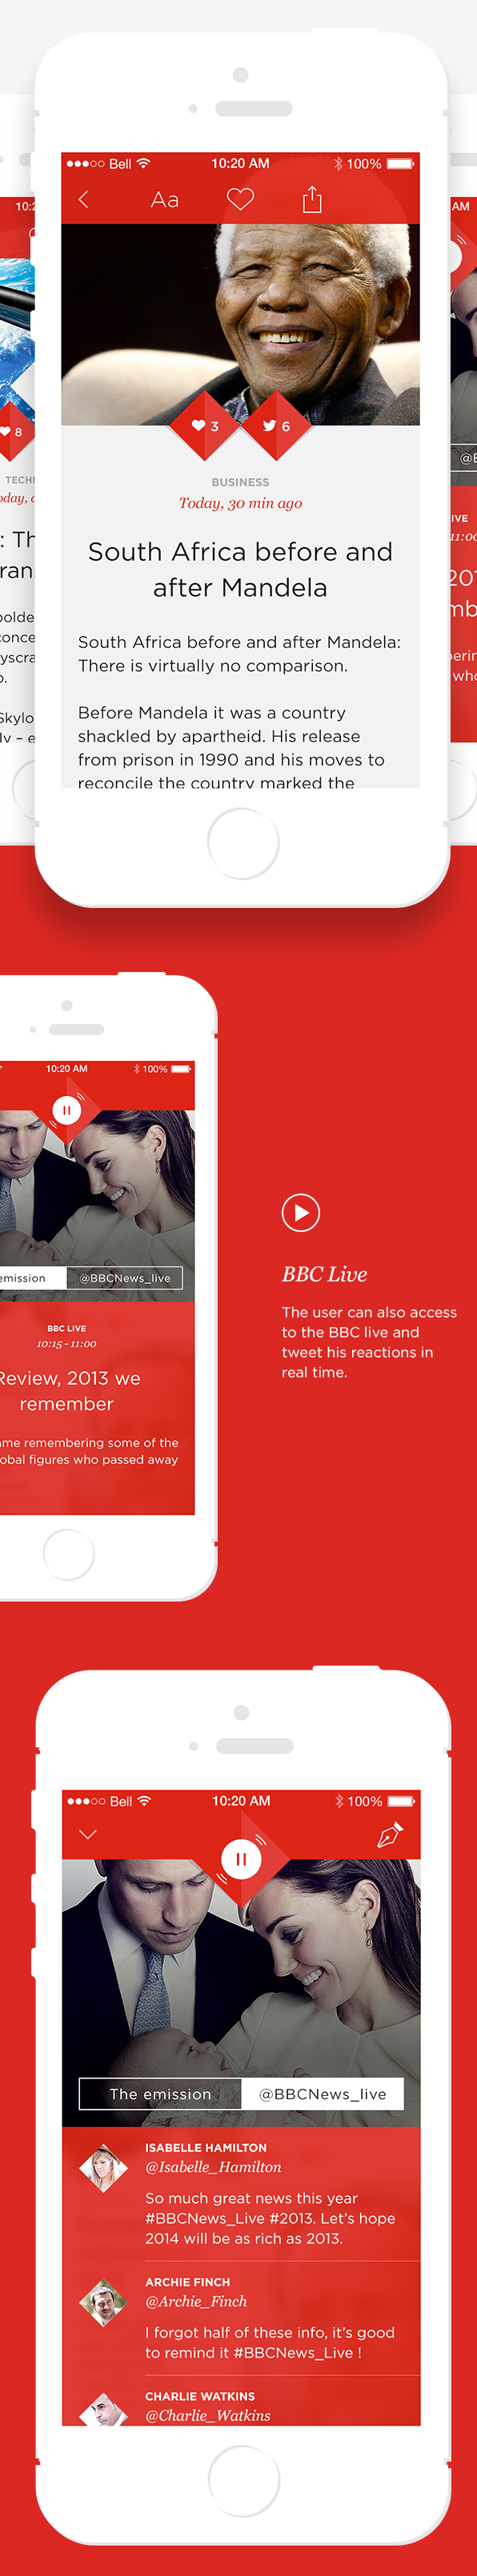 app application iphone ios7 mobile news info BBC